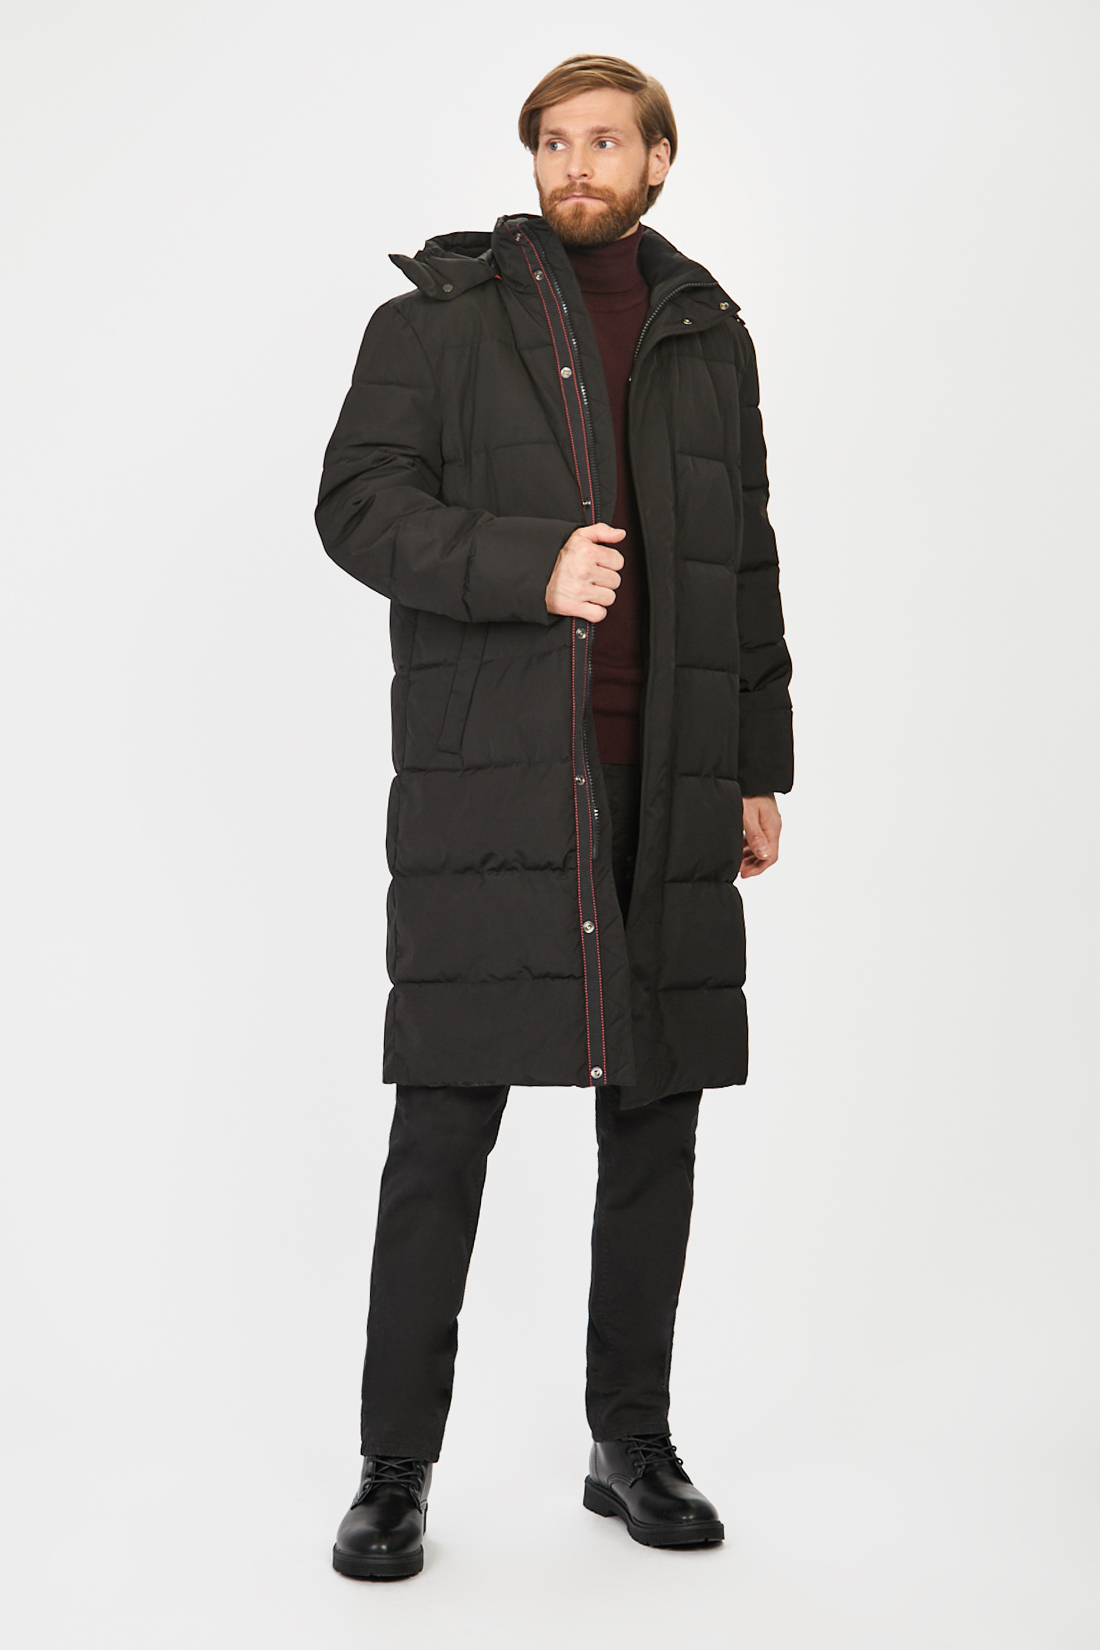 Куртка (Эко пух) (арт. baon B541506), размер S, цвет черный Куртка (Эко пух) (арт. baon B541506) - фото 7